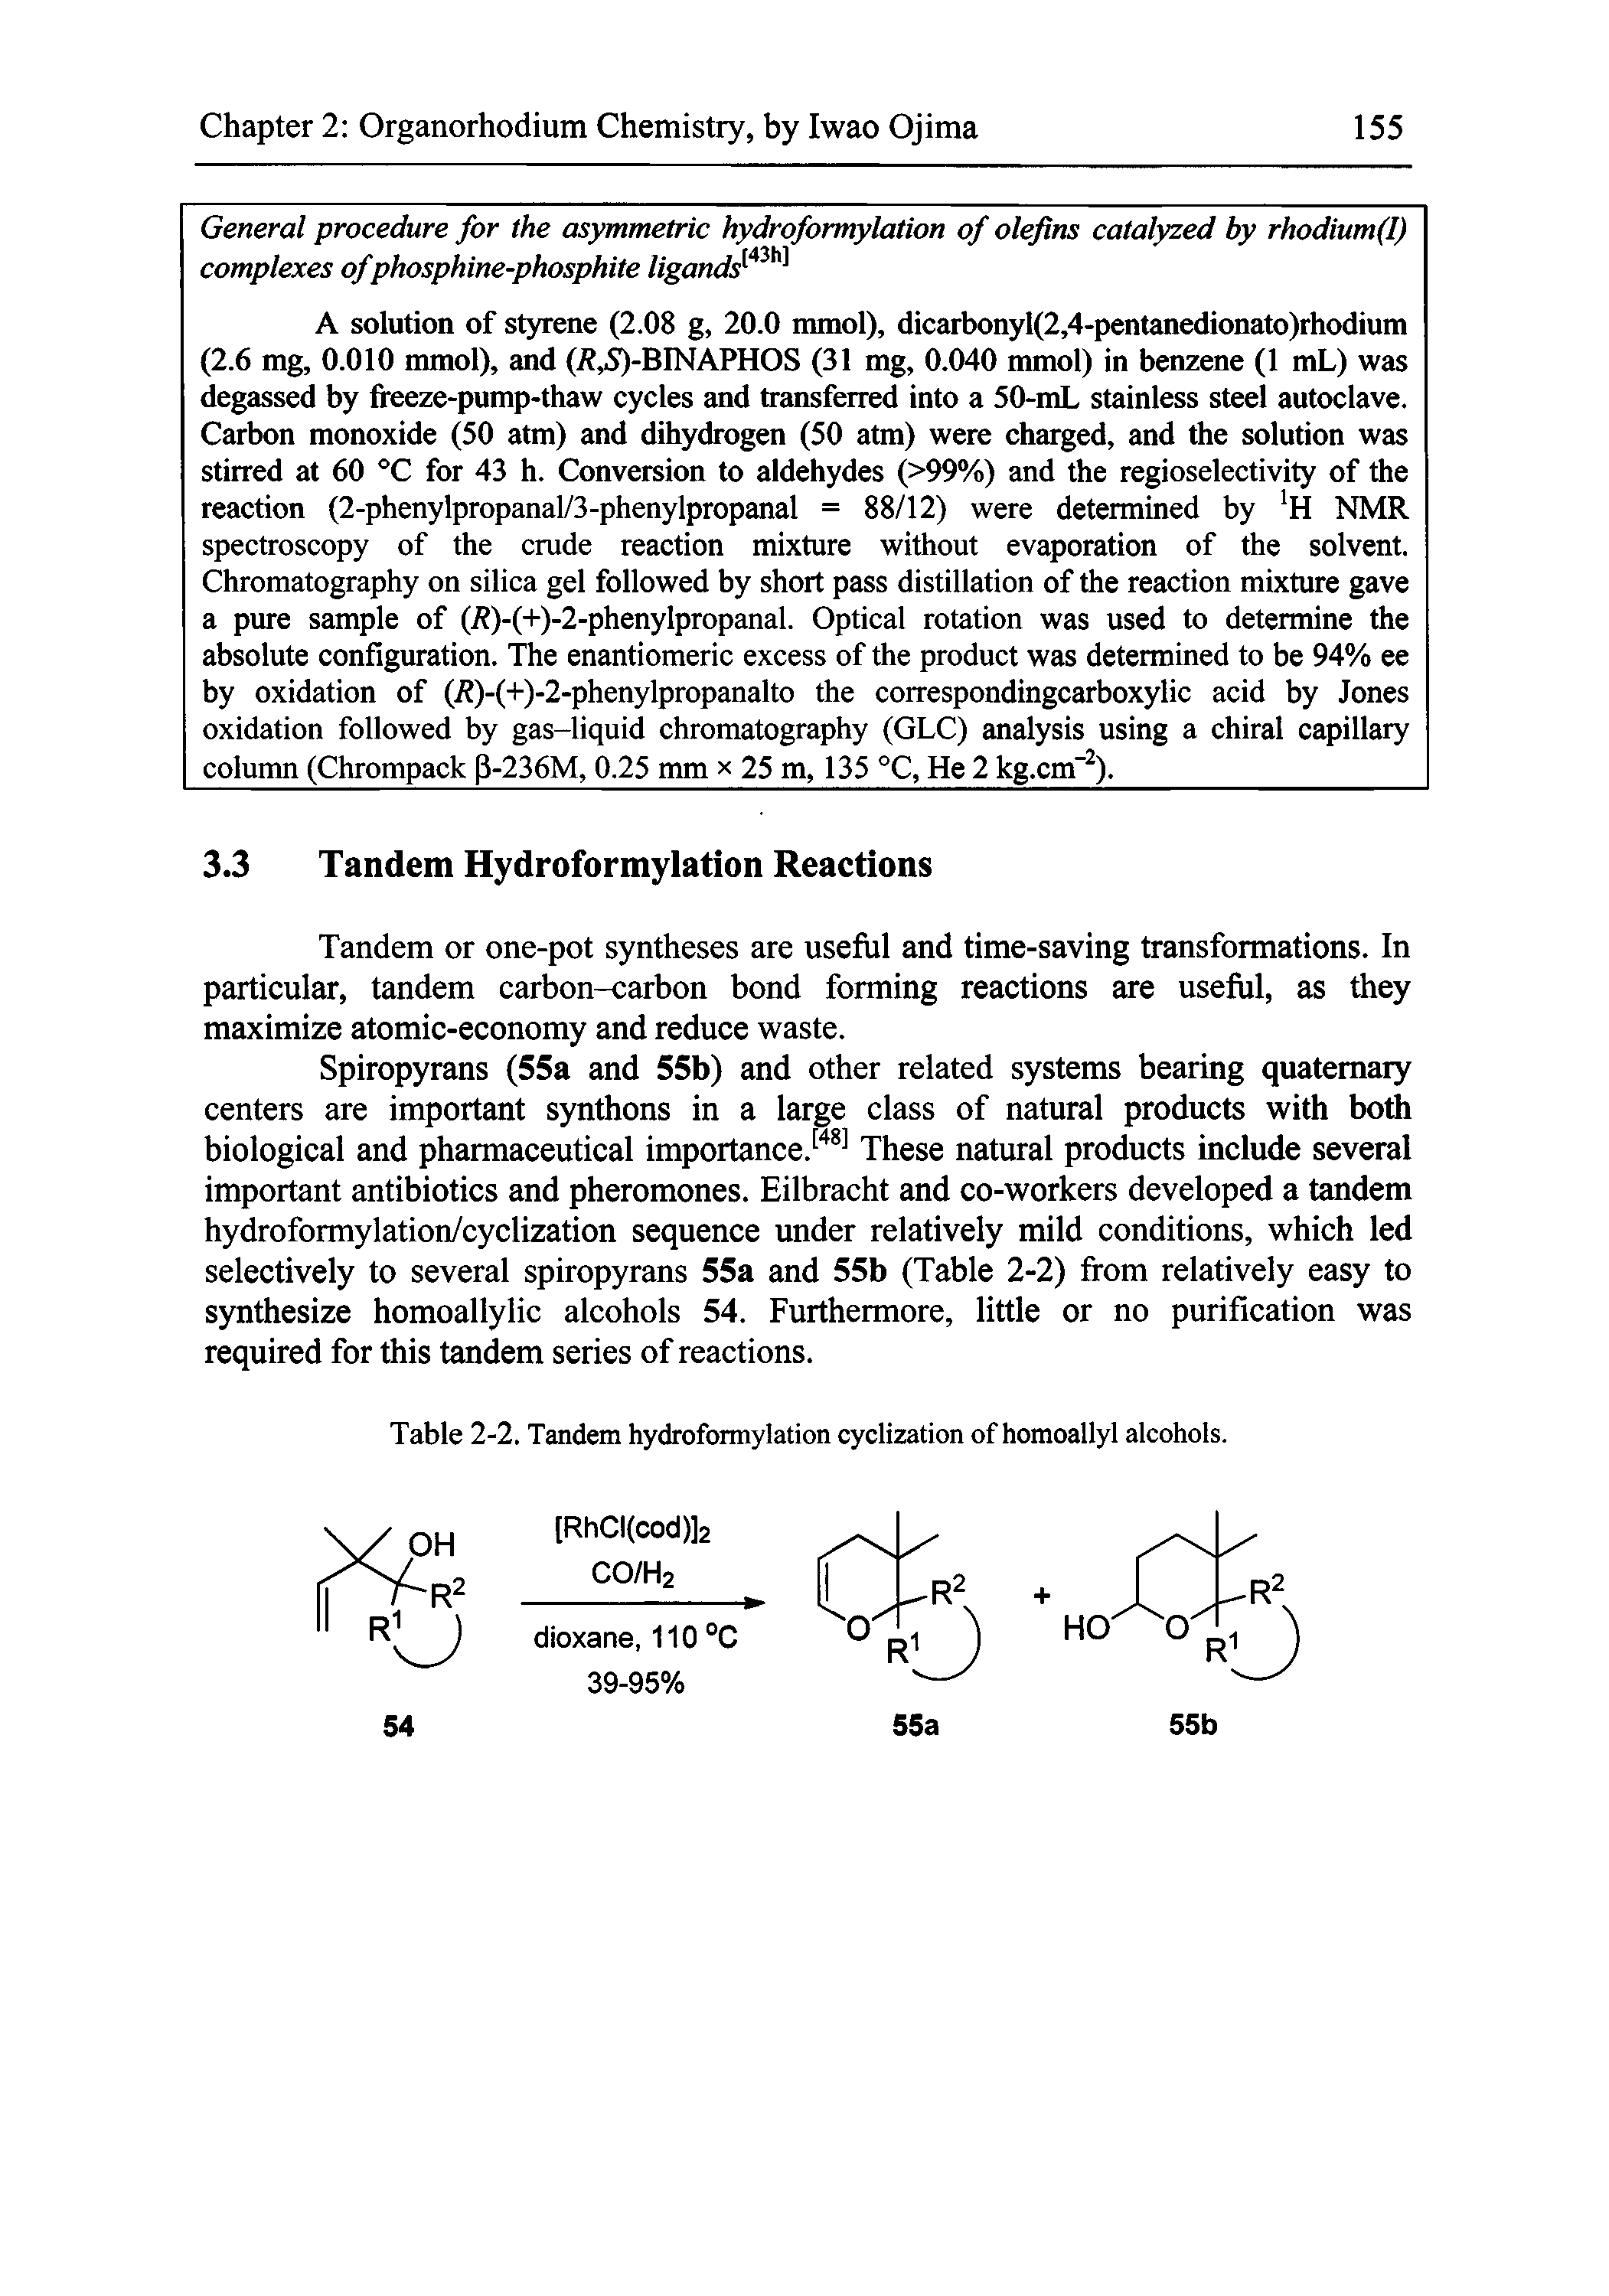 Table 2-2. Tandem hydroformylation cyclization of homoallyl alcohols.